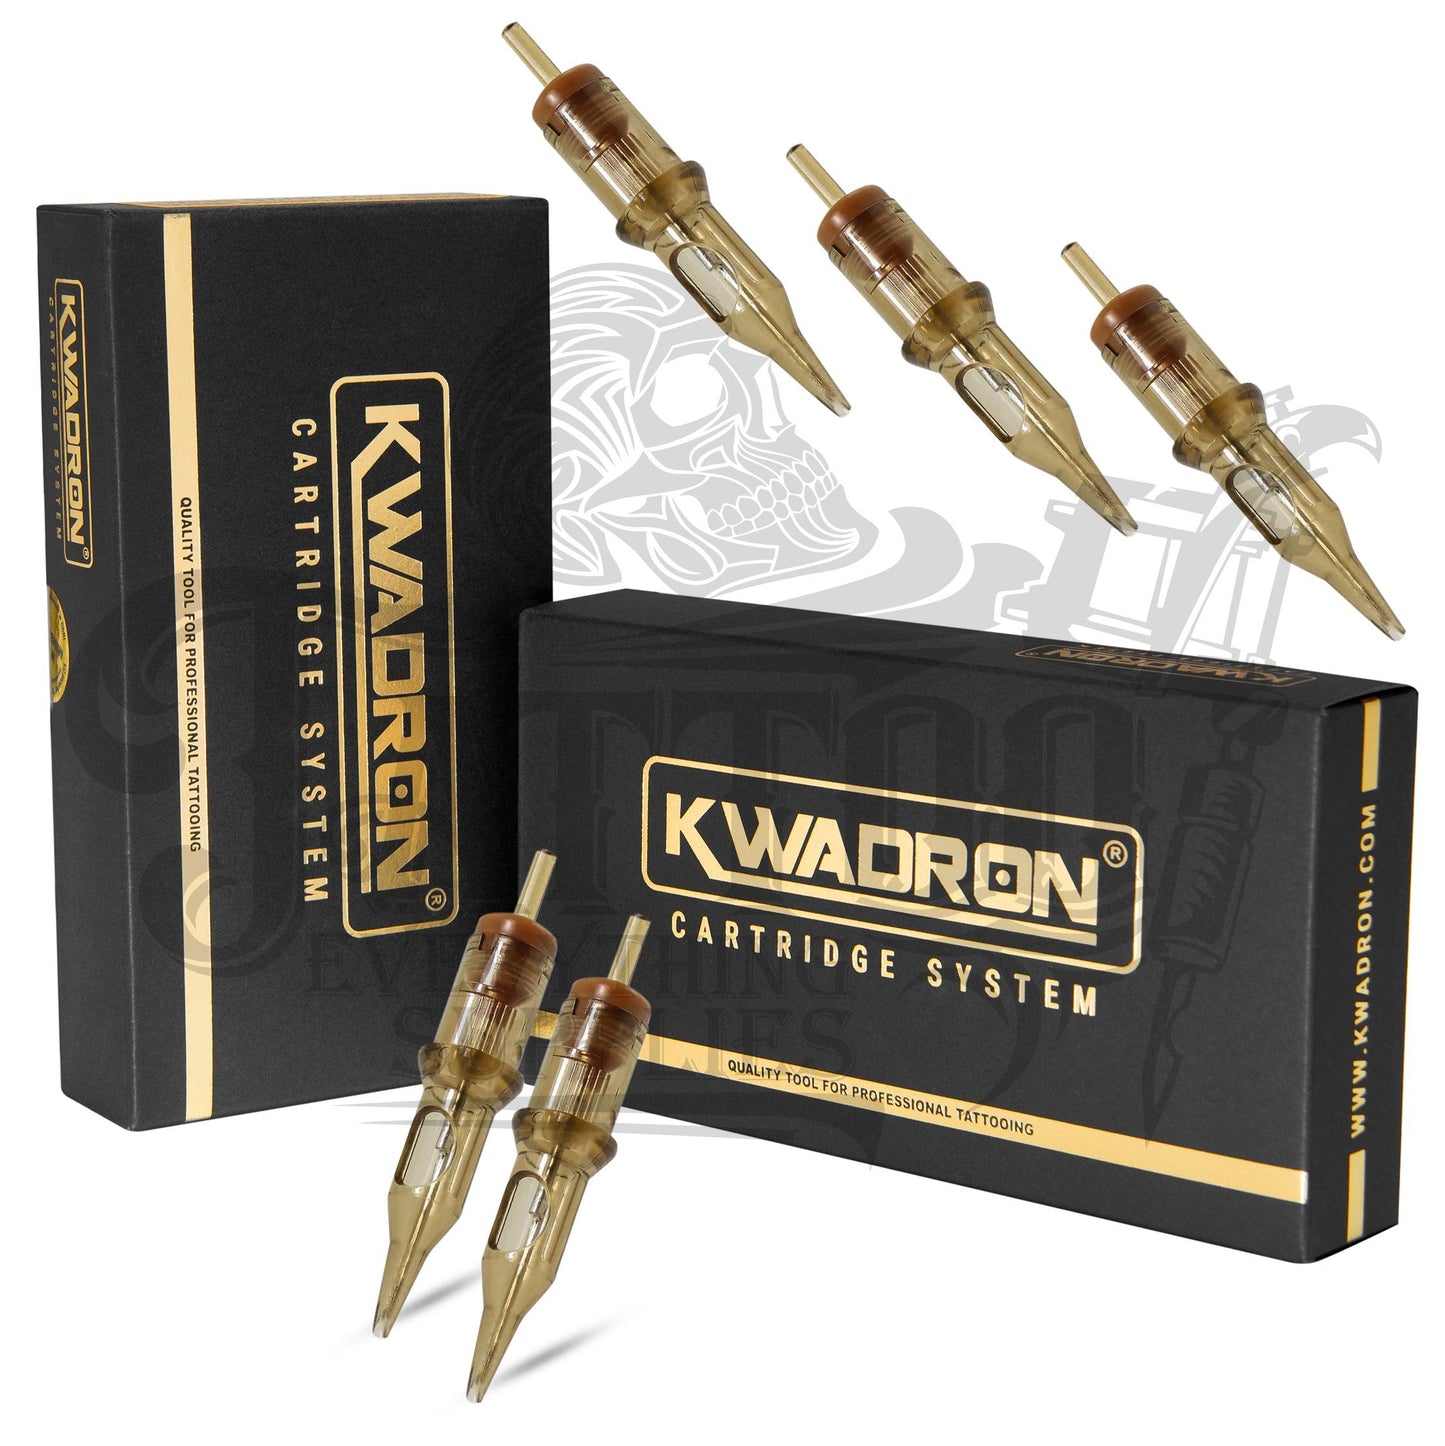 Kwadron Cartridges 0.35 Shaders LT